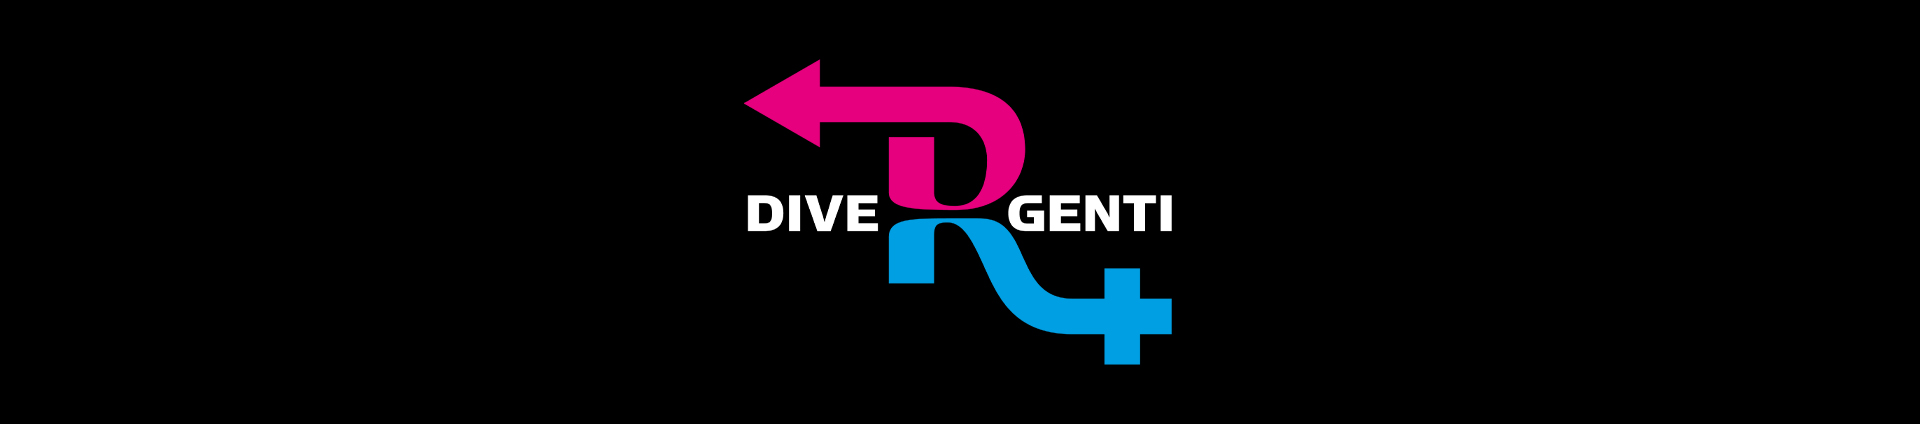 Divergenti-Edizioni-Passate_0000s_0001_Logo divergenti 2